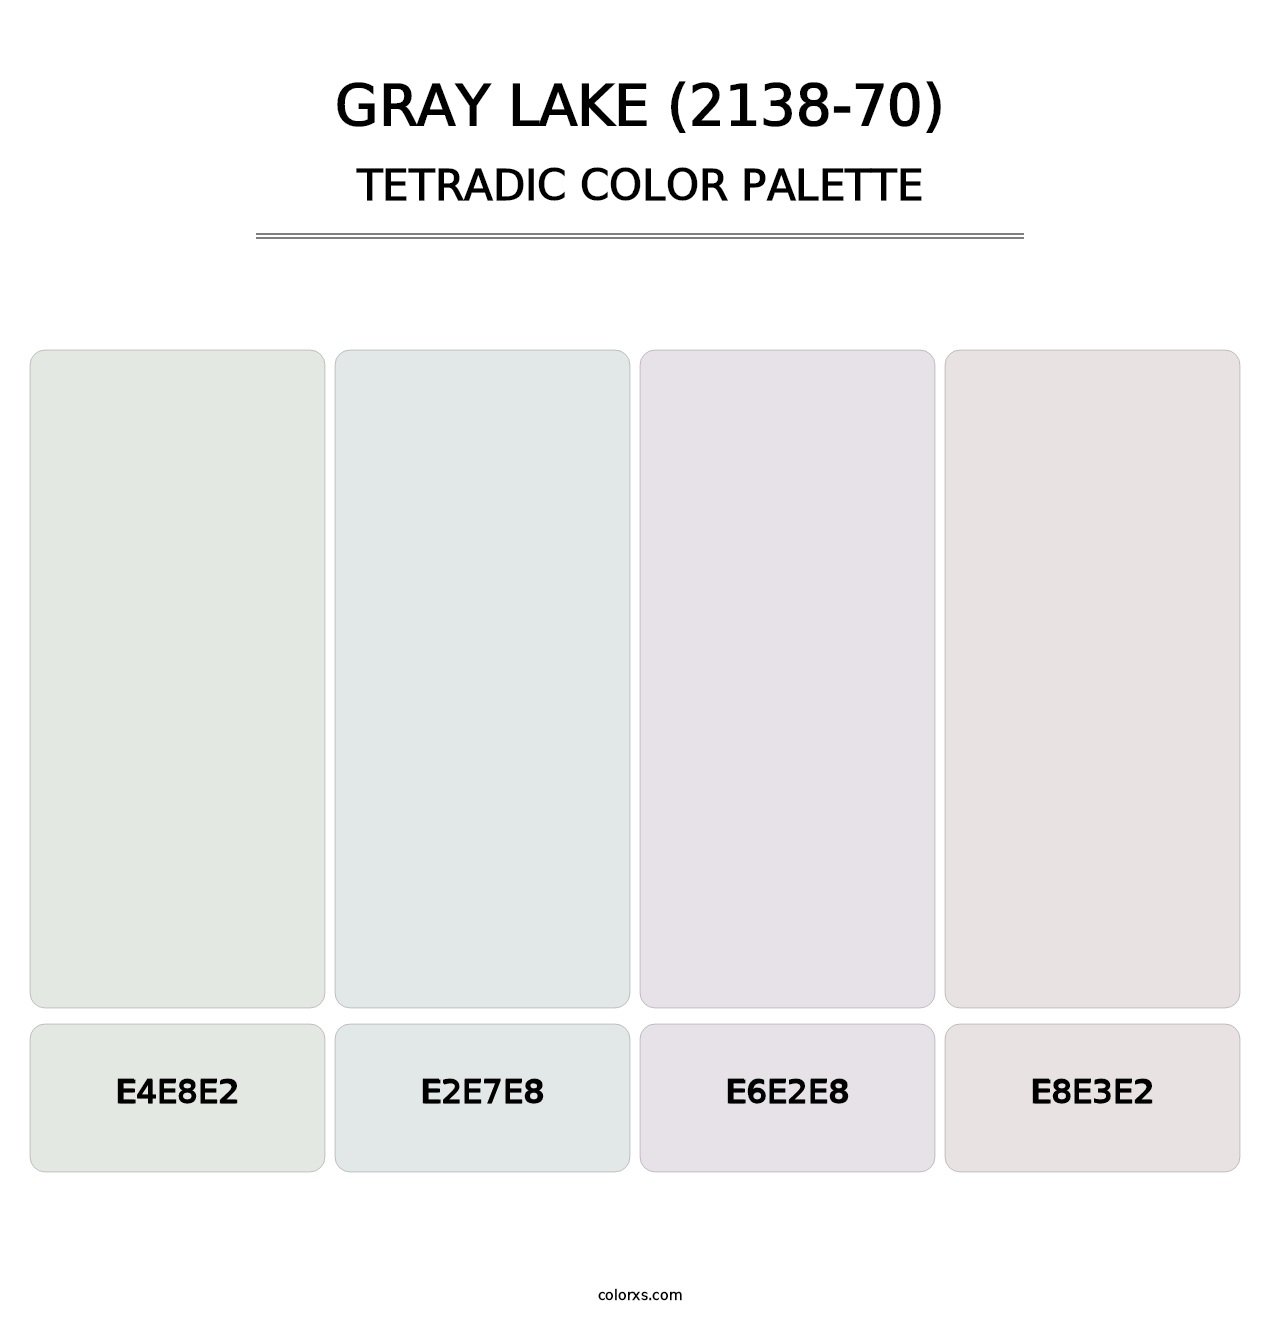 Gray Lake (2138-70) - Tetradic Color Palette